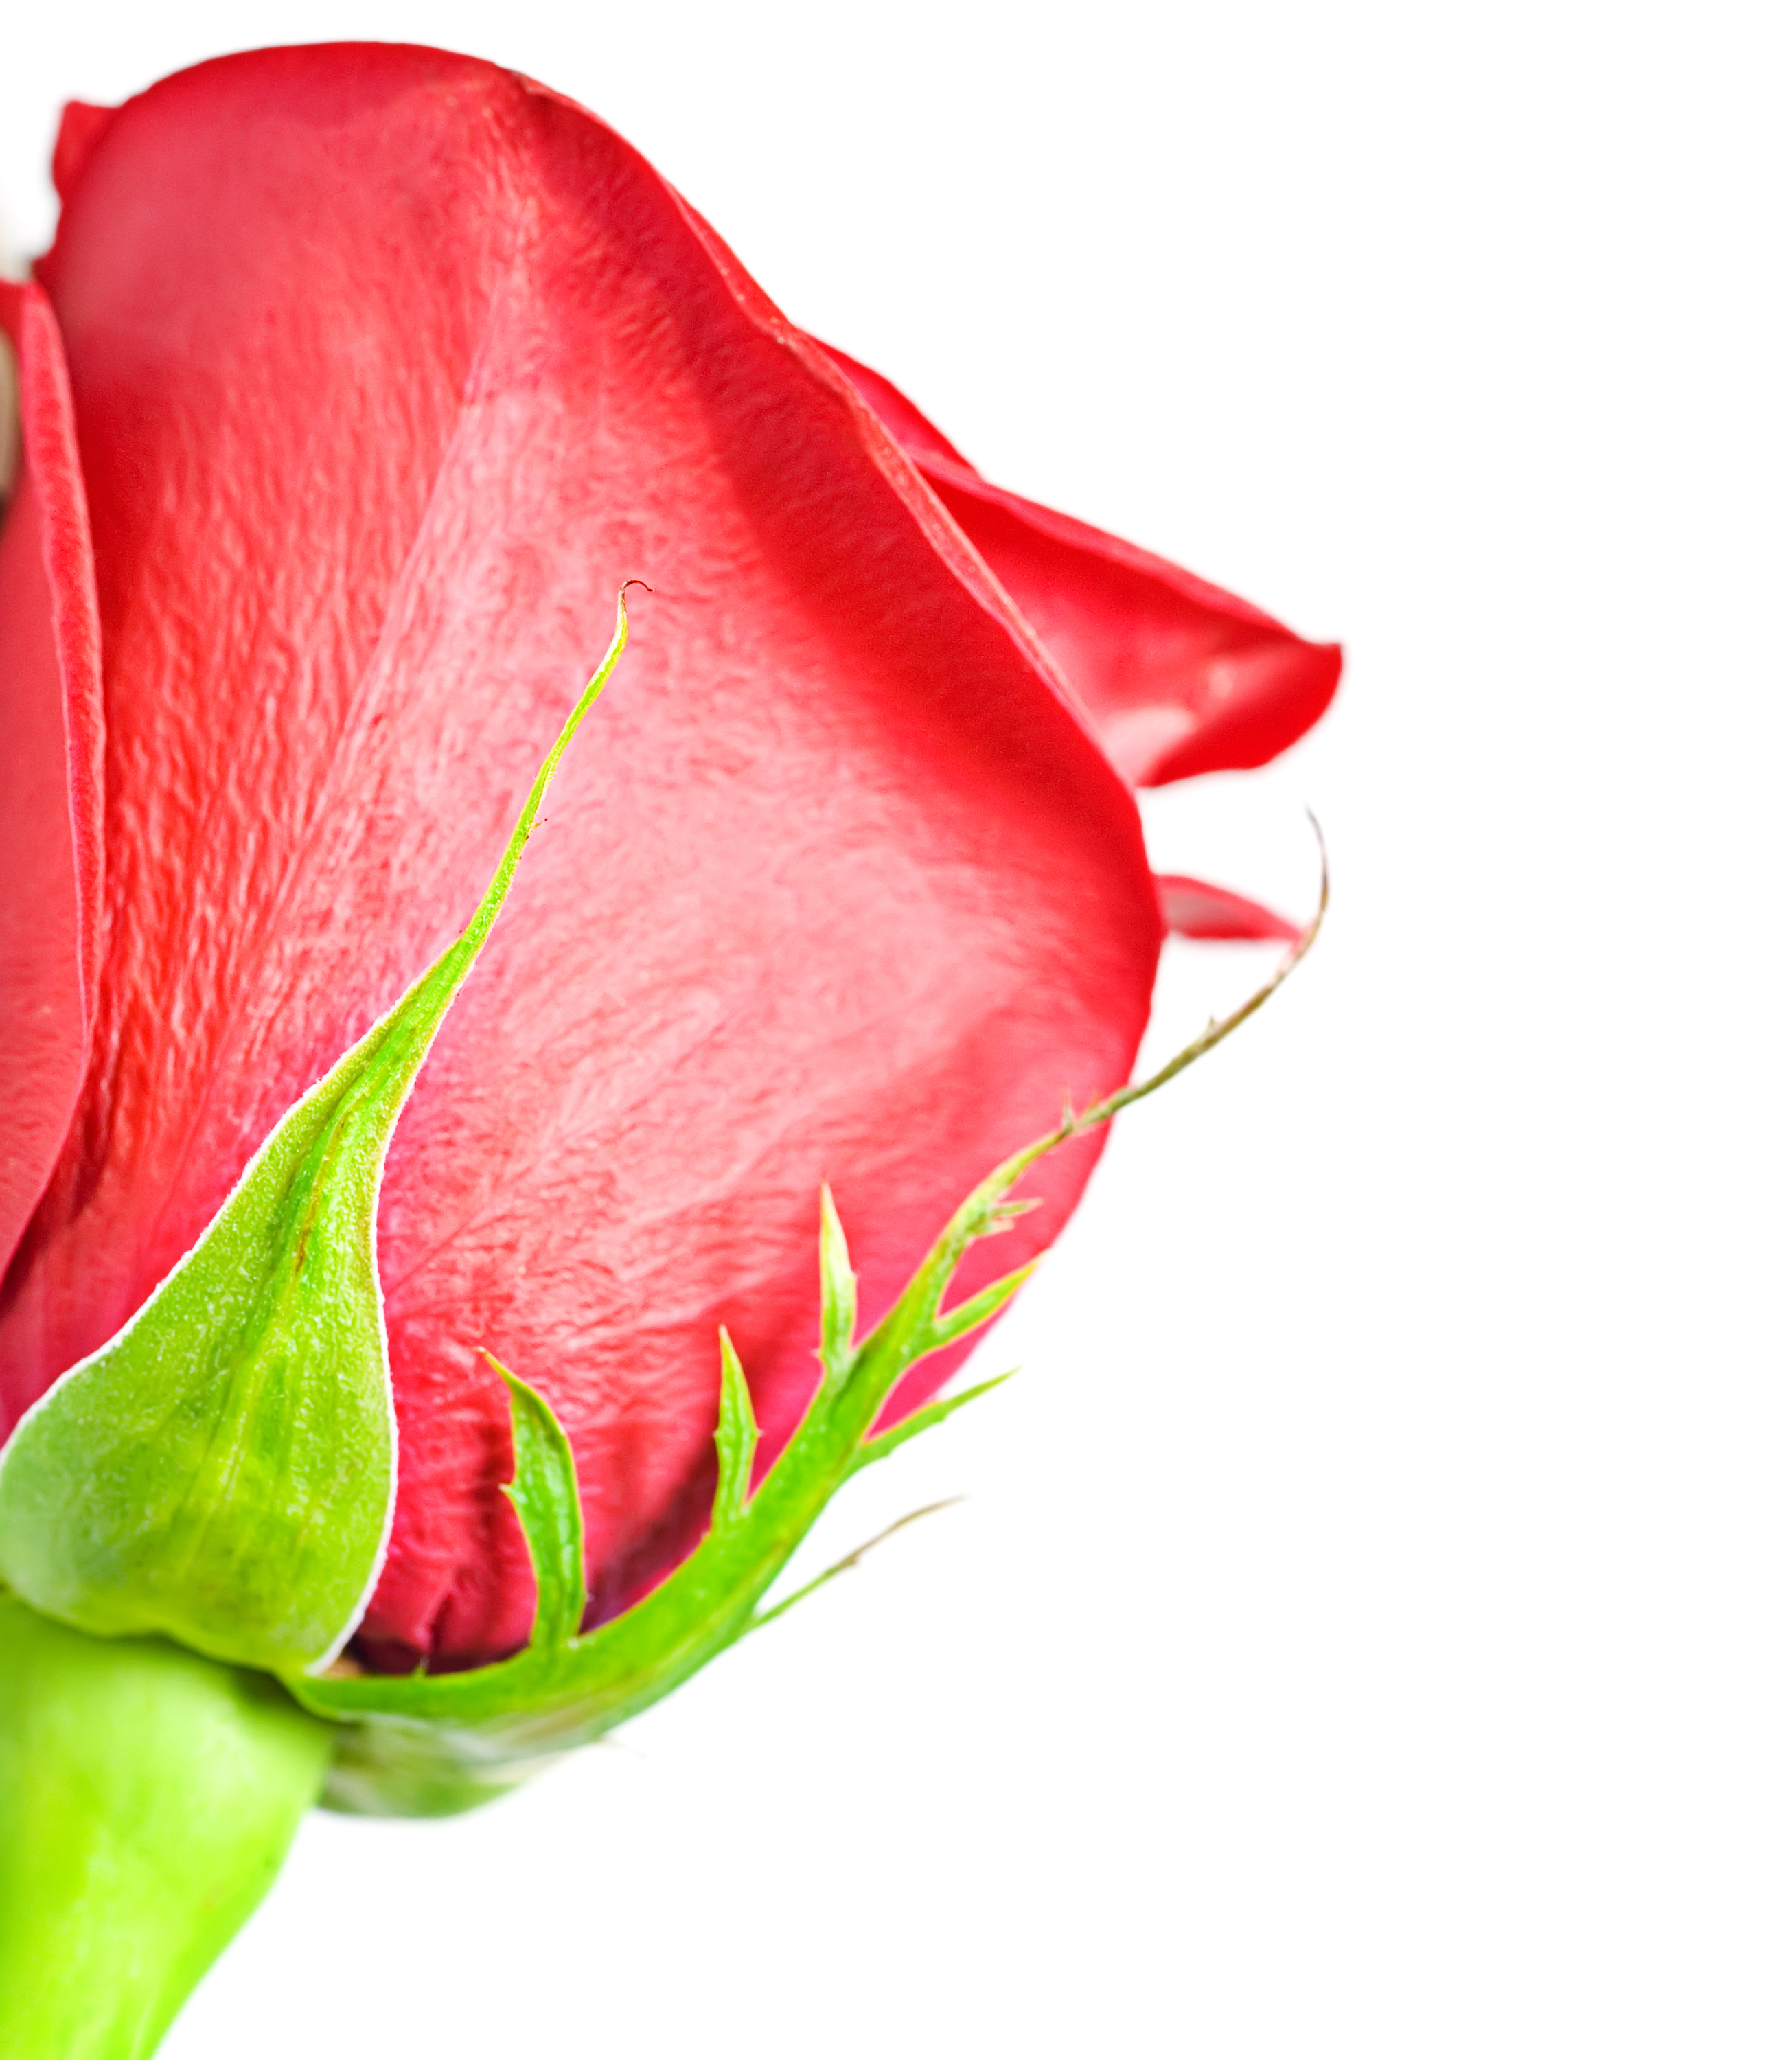 Red rose, Flower, Valentine, Summer, Spring, HQ Photo